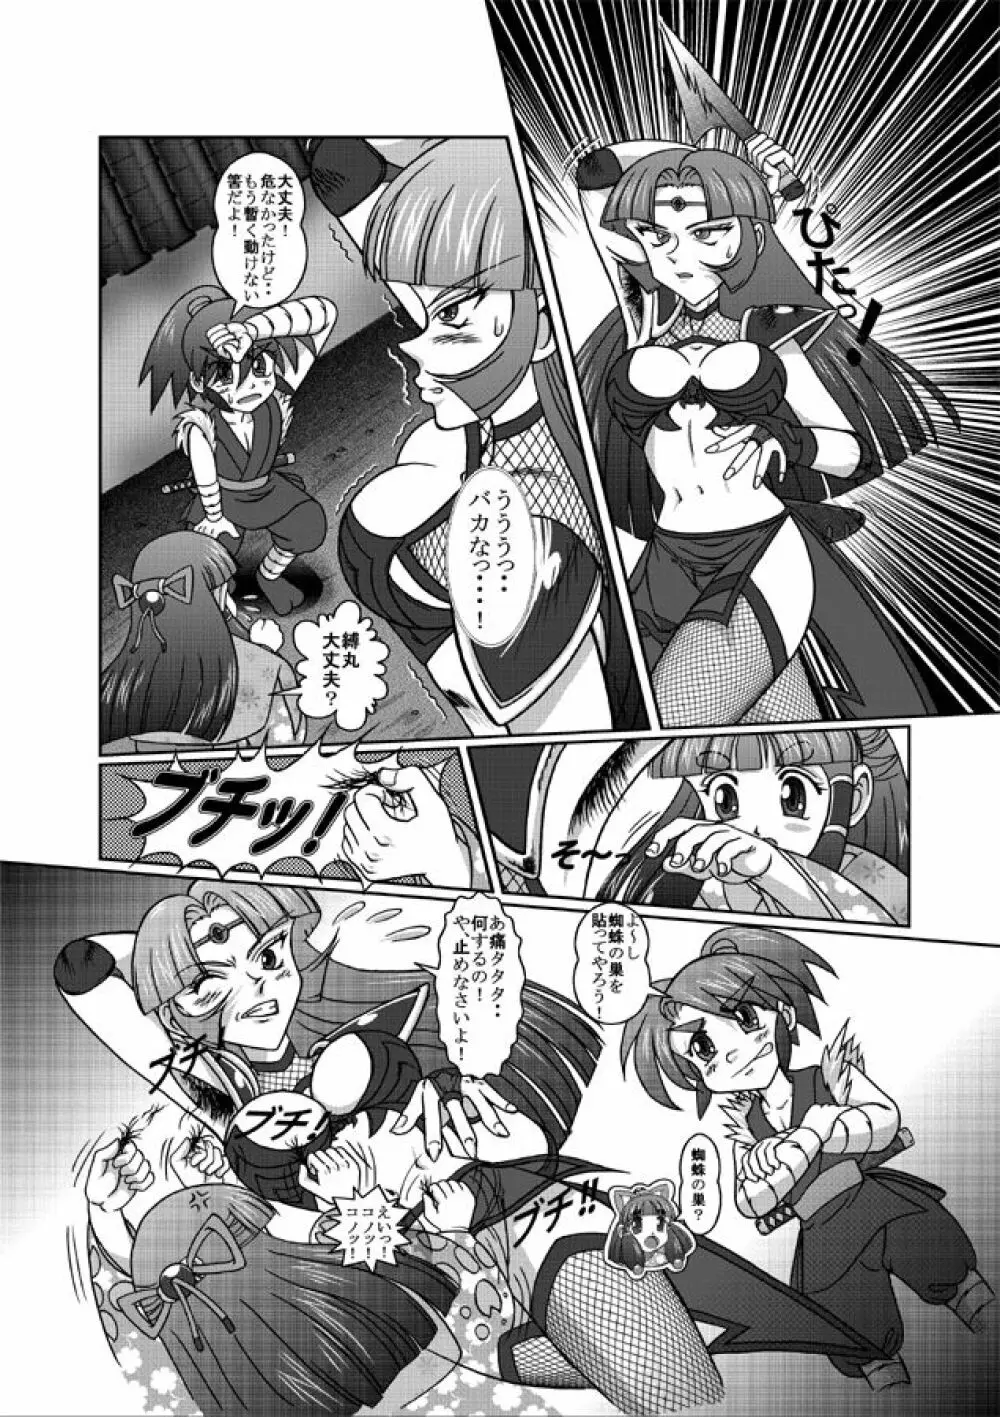 Same-themed manga about kid fighting female ninjas from japanese imageboard. 29ページ